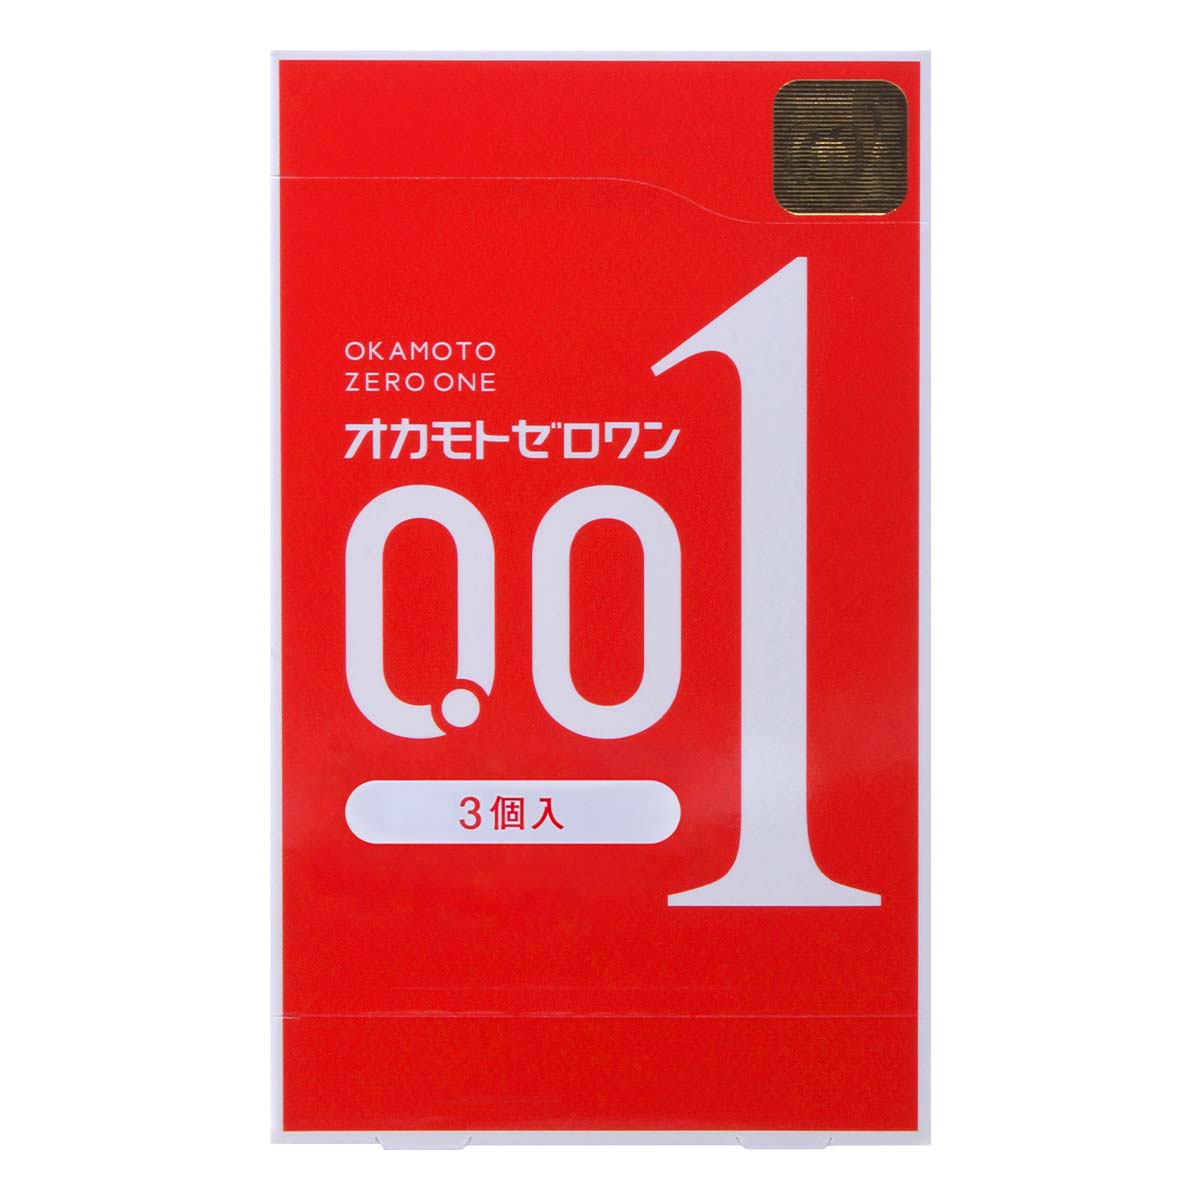 Okamoto 0.01 3's Pack PU Condom-p_2